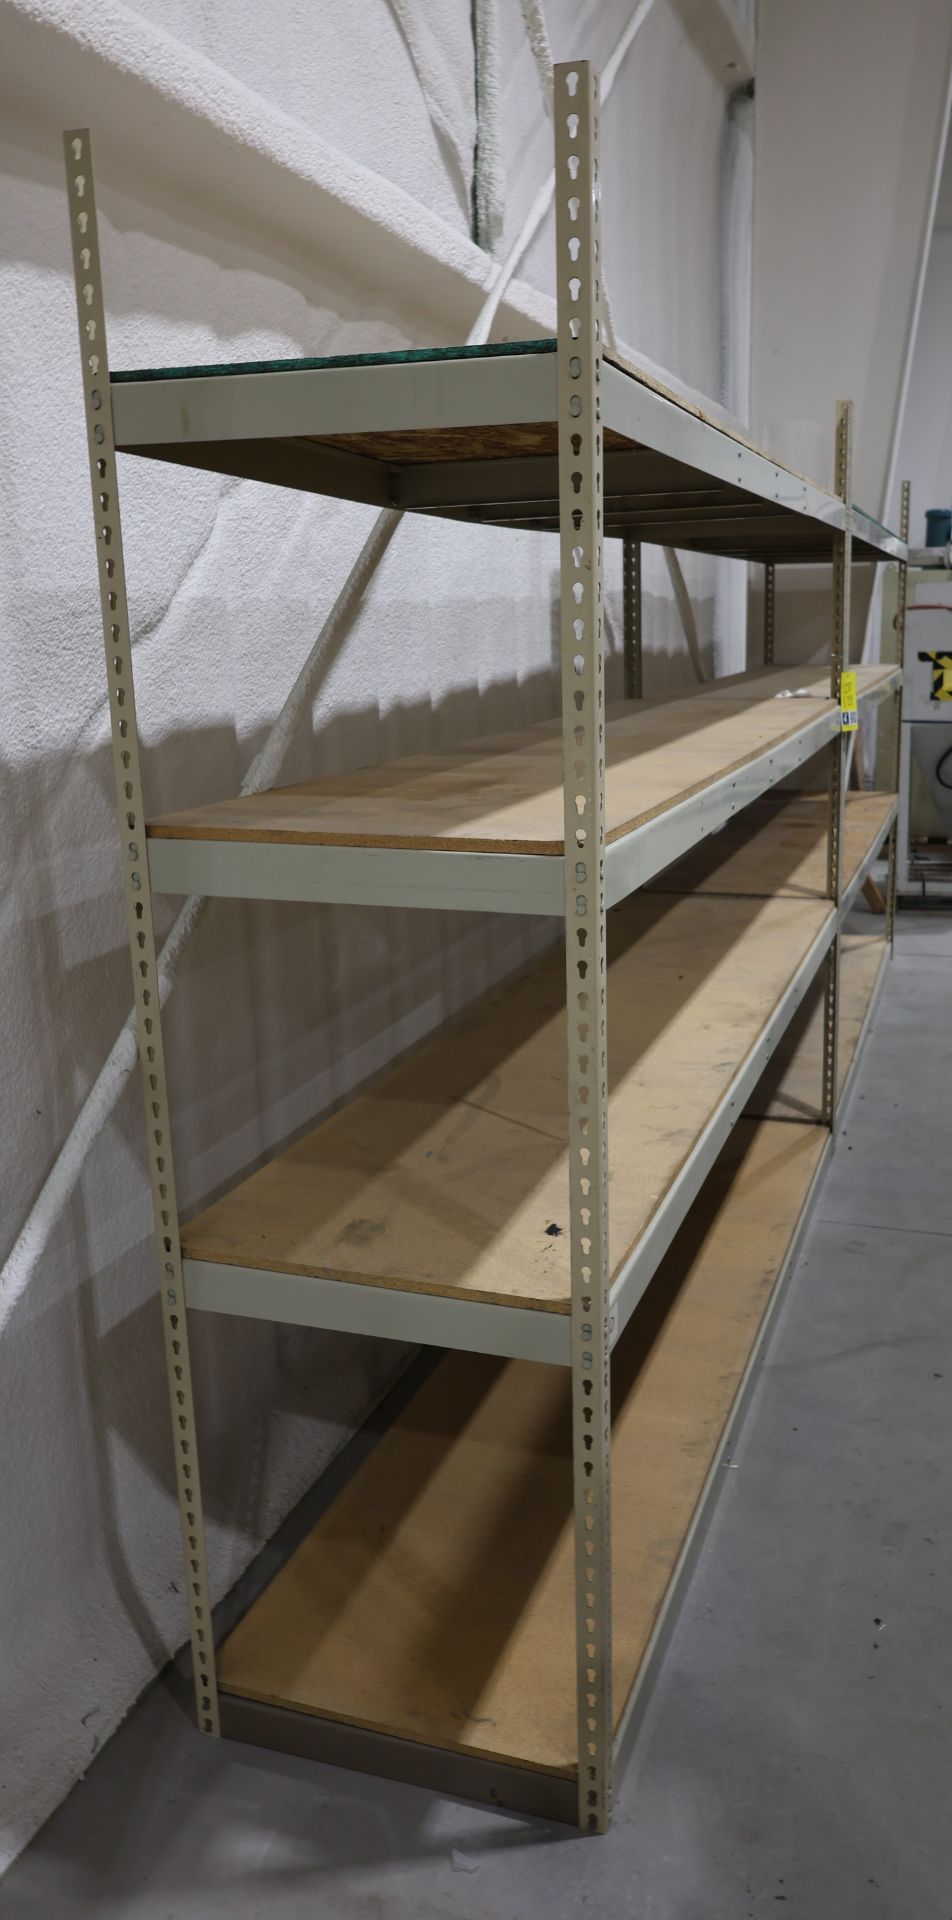 Shelves - Image 2 of 2